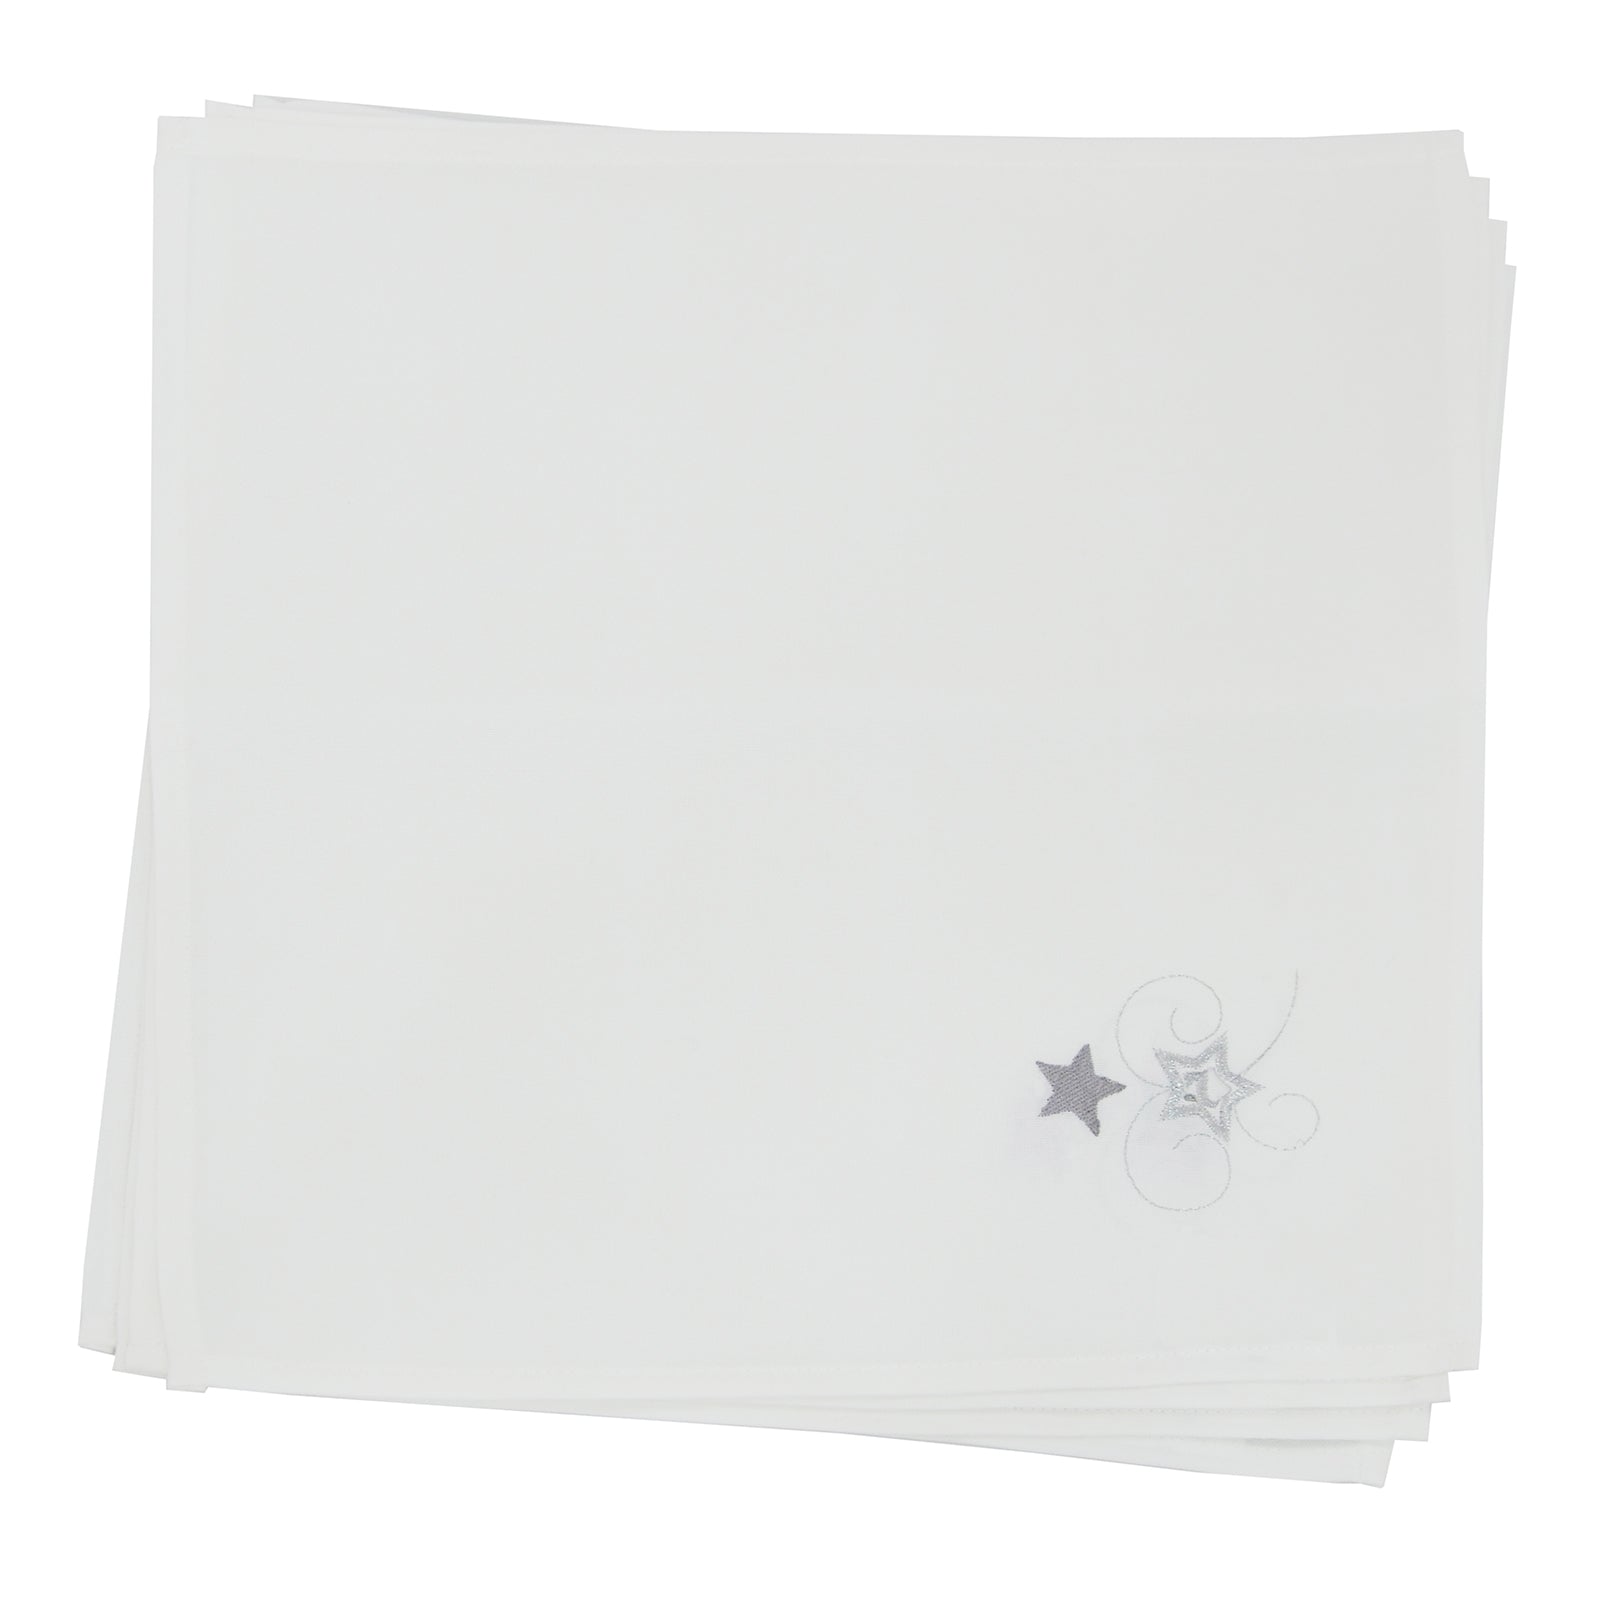 Mr Crimbo White Christmas Tablecloth Napkins Silver Presents - MrCrimbo.co.uk -XS6587 - 4 pk Napkins -christmas napkins